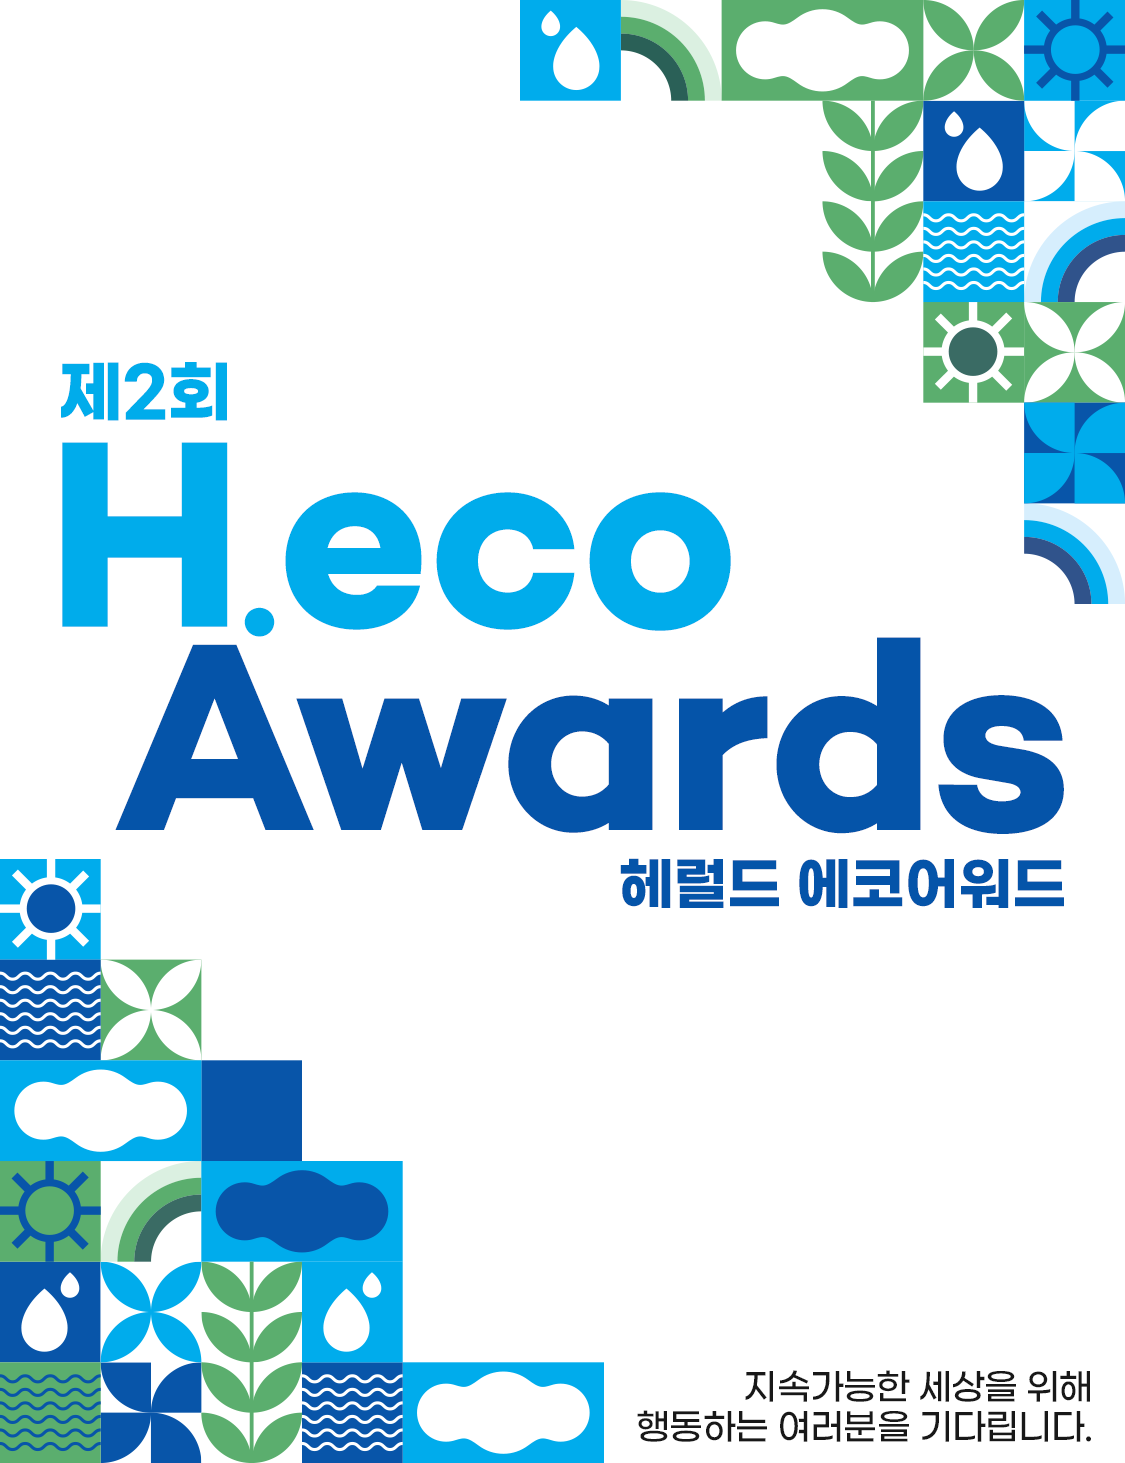 2nd H.eco Awards | 제2회 헤럴드 에코어워드